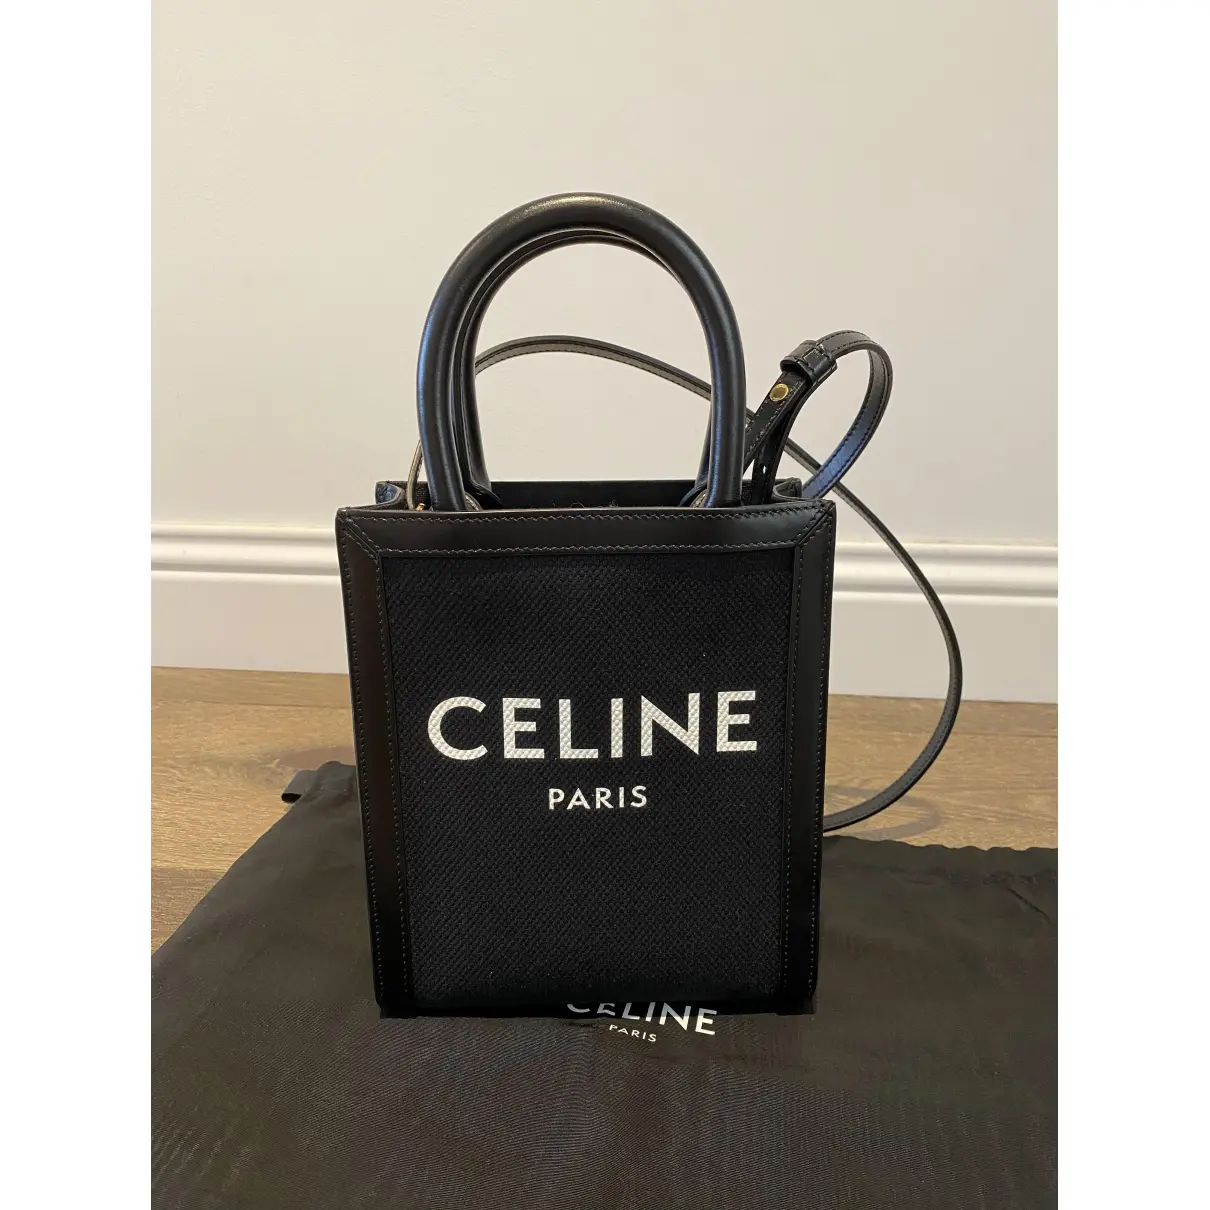 Buy Celine Cabas tote online